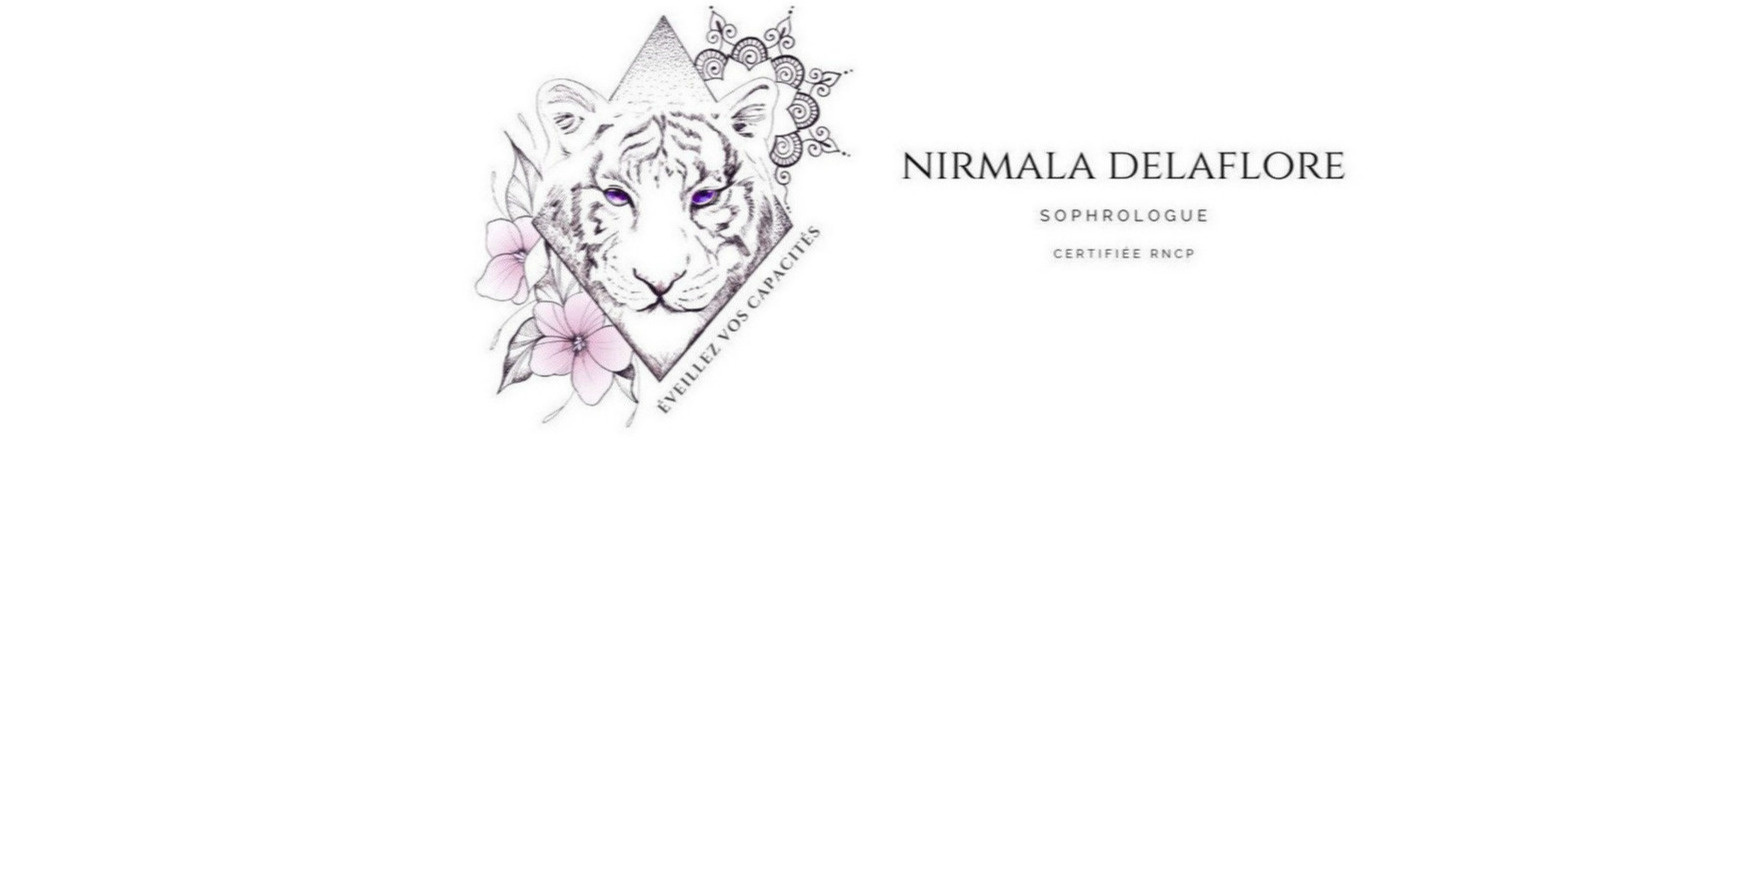 Boutique DELAFLORE Nirmala - Sophrologue certifie - Made in Sainte Foy